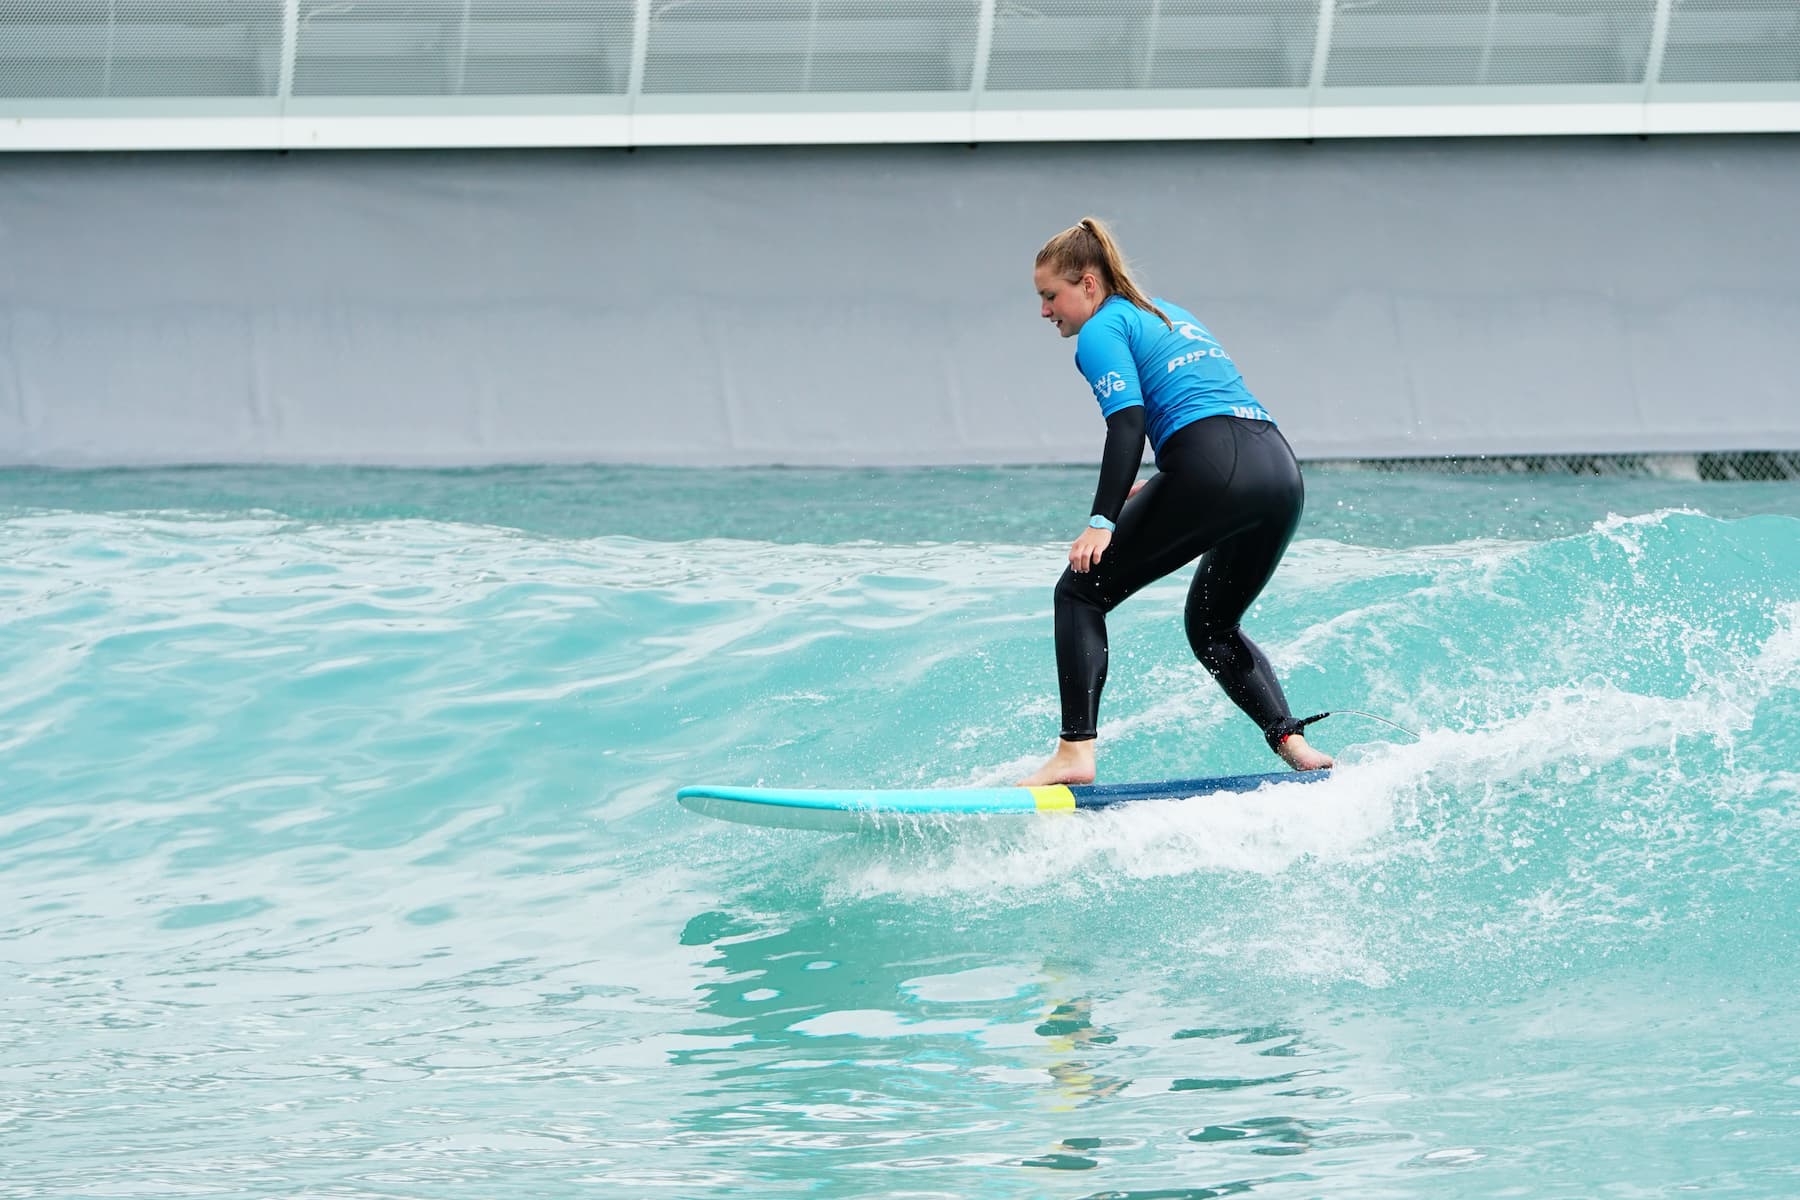 Woman surfs intermediate wave at inland surf lake The Wave near Bristol